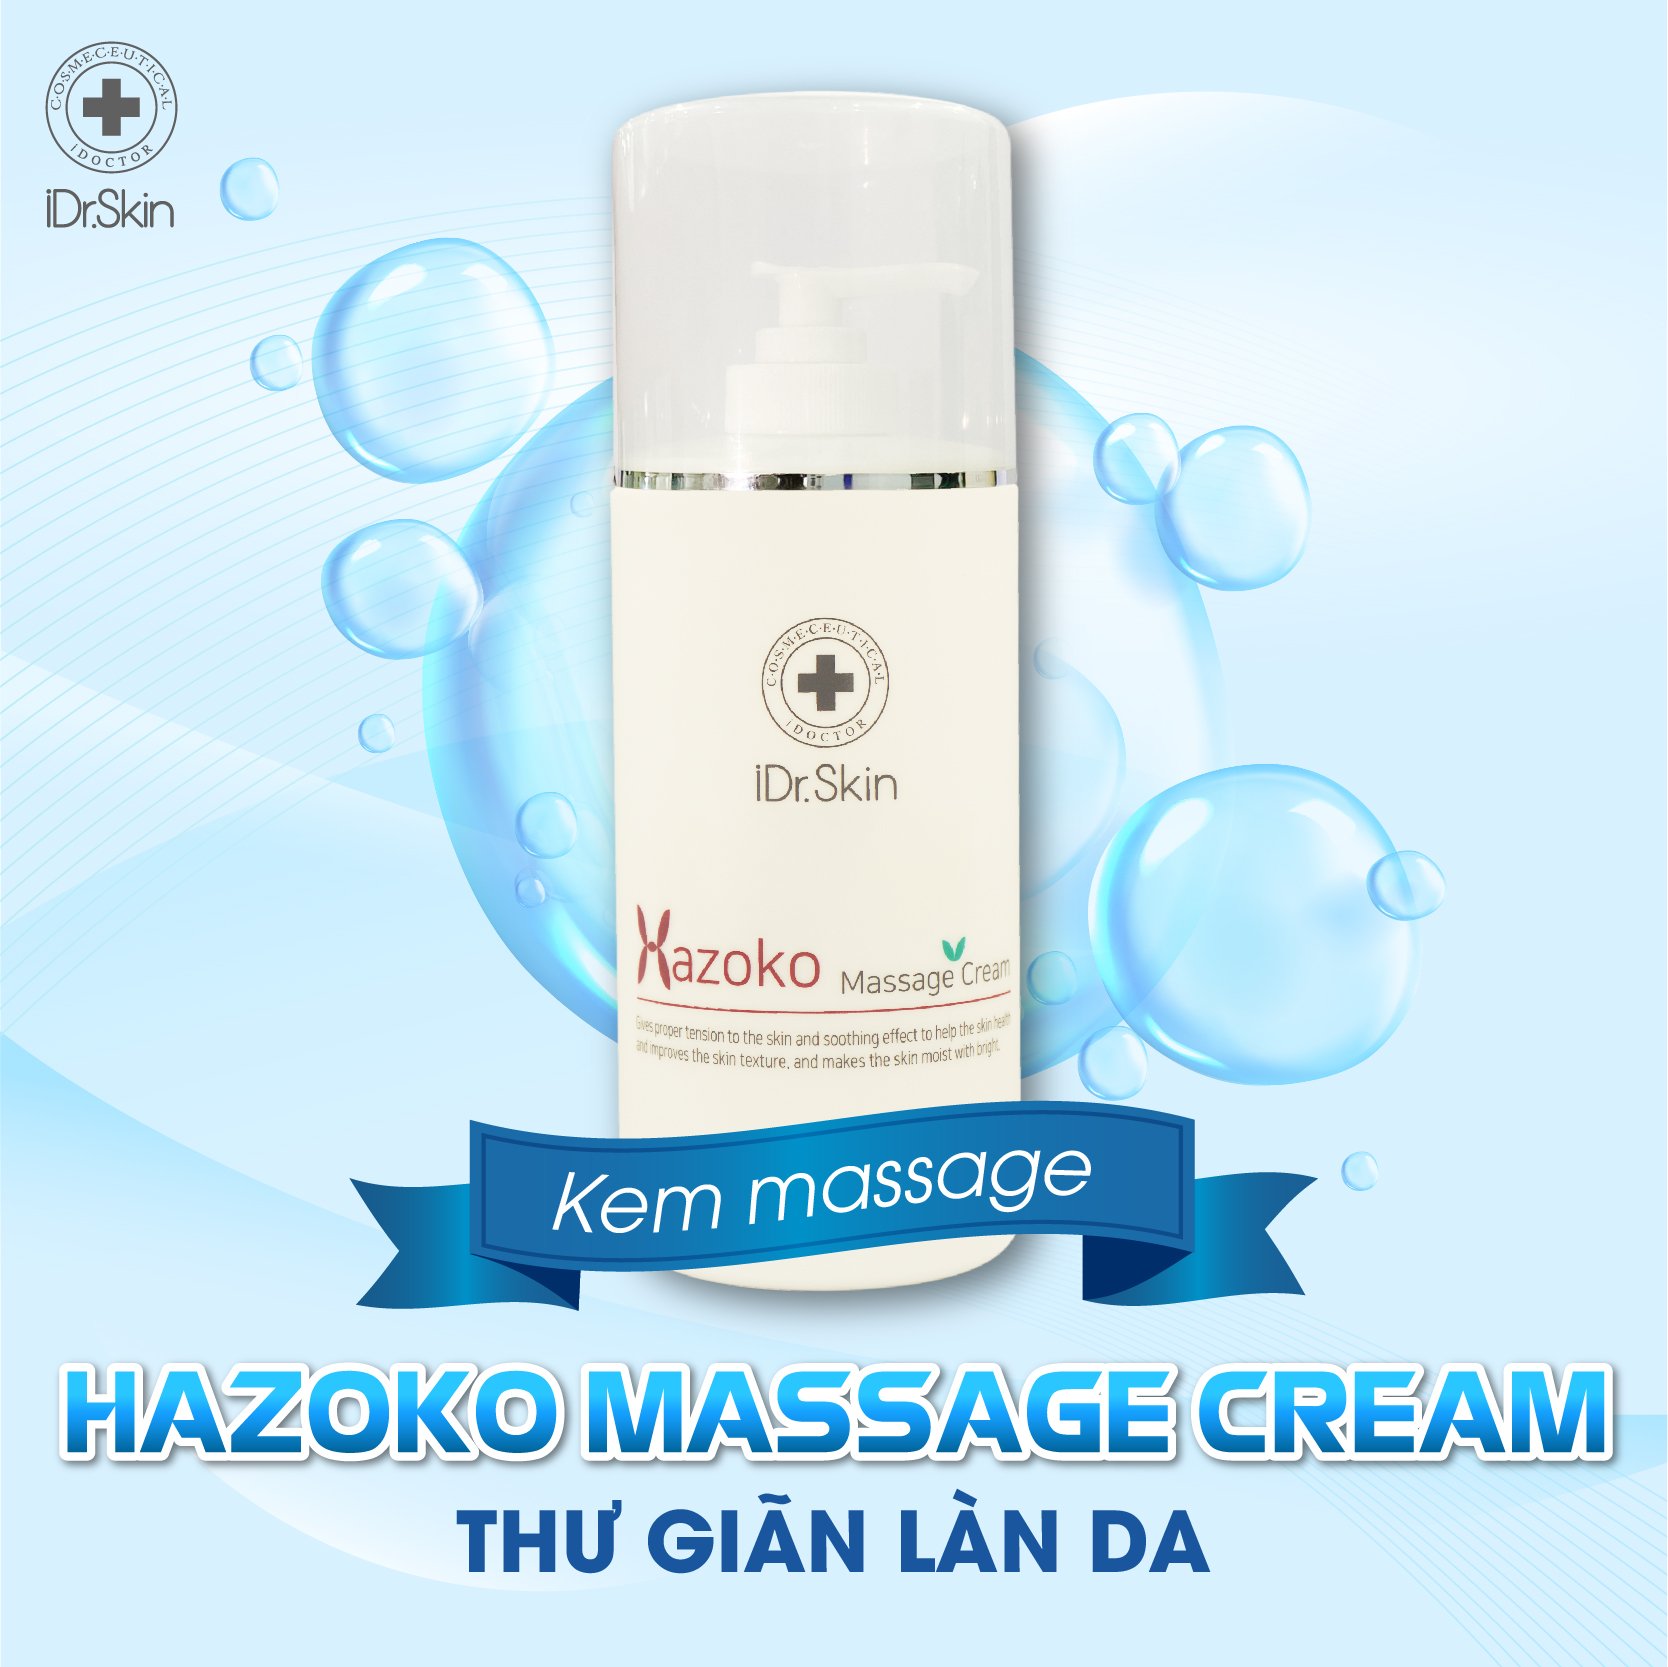 kem-massage-mat-hazoko-massage-cream